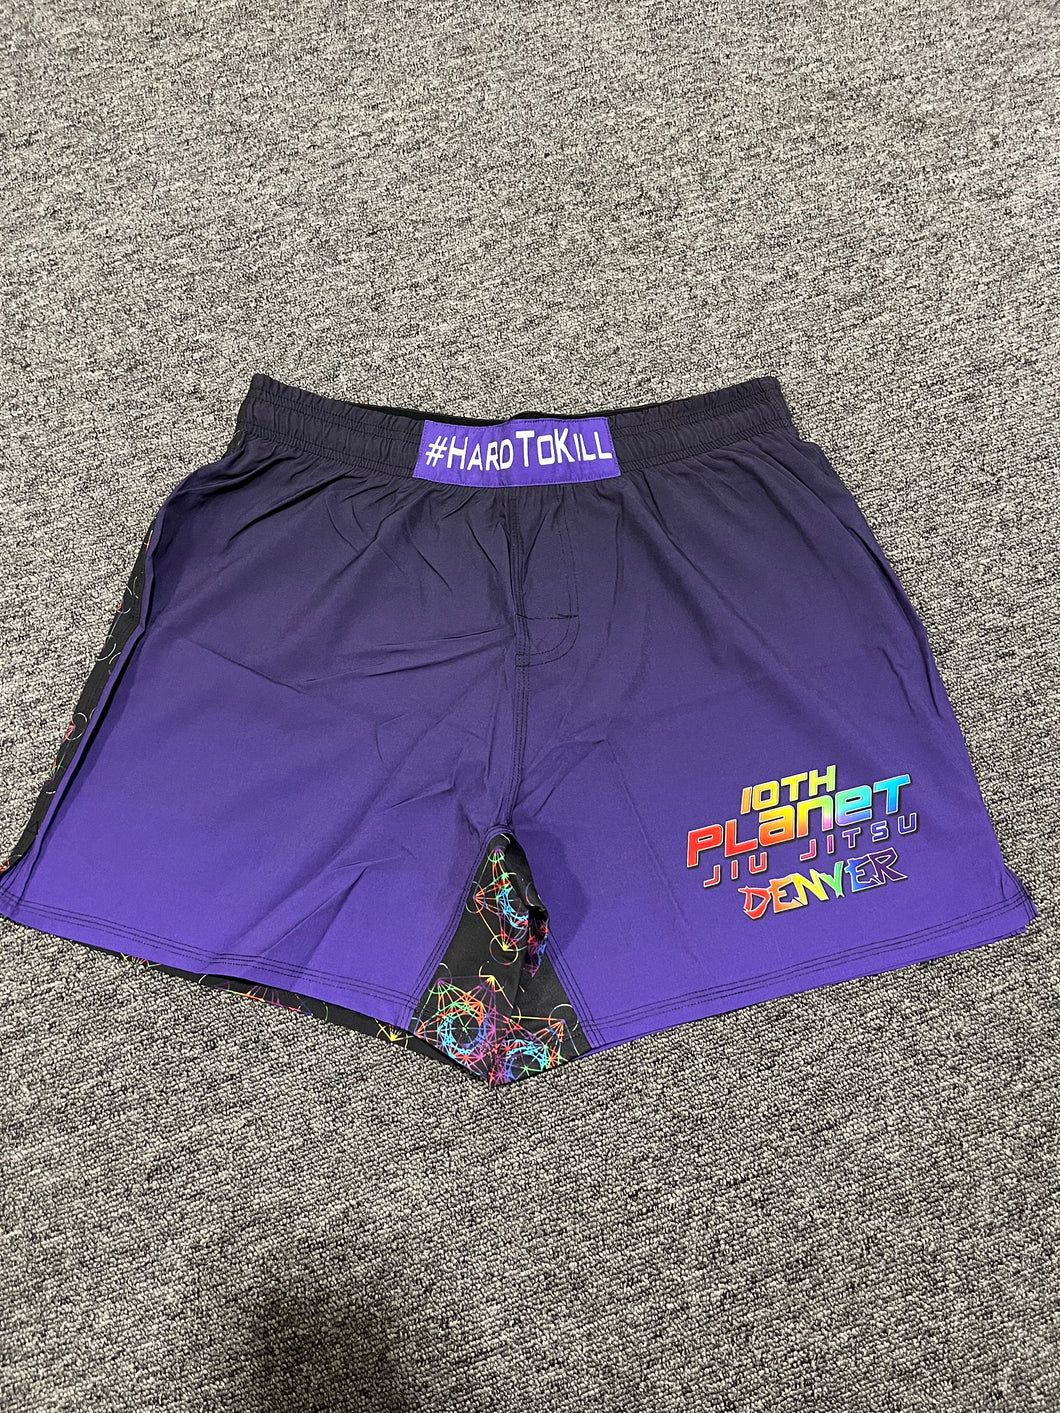 Ribcage Shorts (purple)